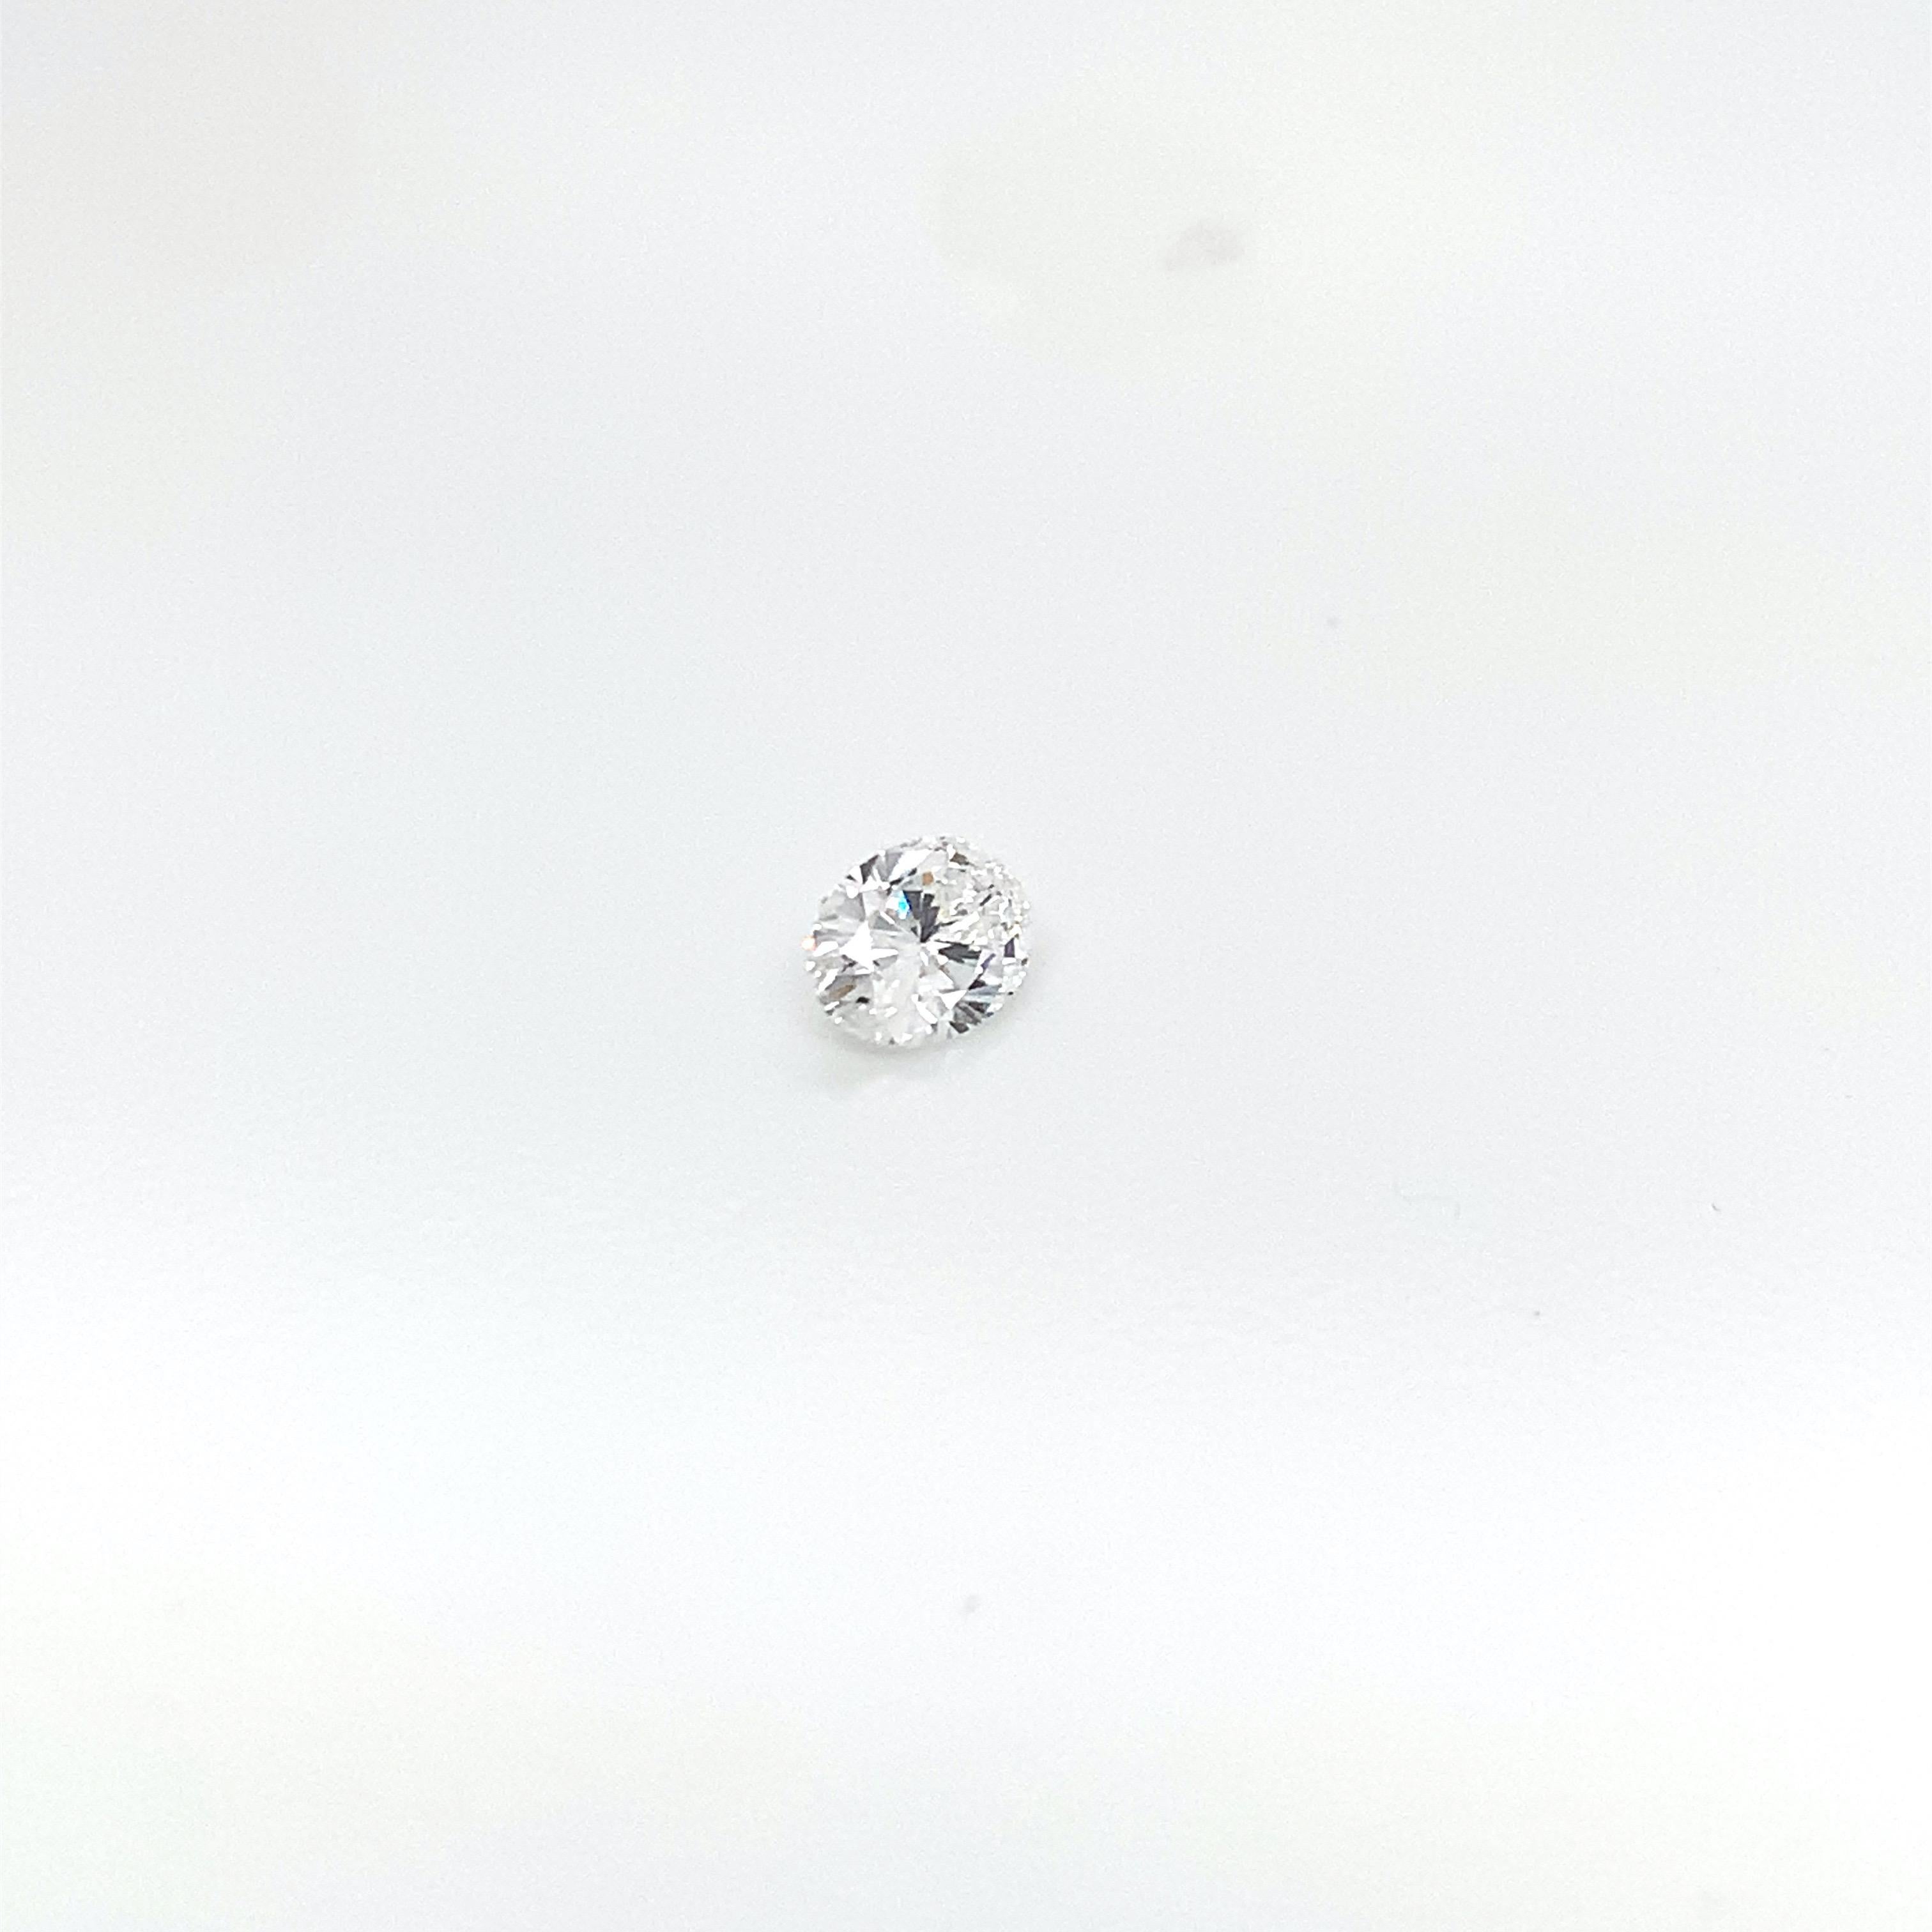 Oval Cut GIA Certified 0.42 Carat Oval Brilliant Diamond For Sale